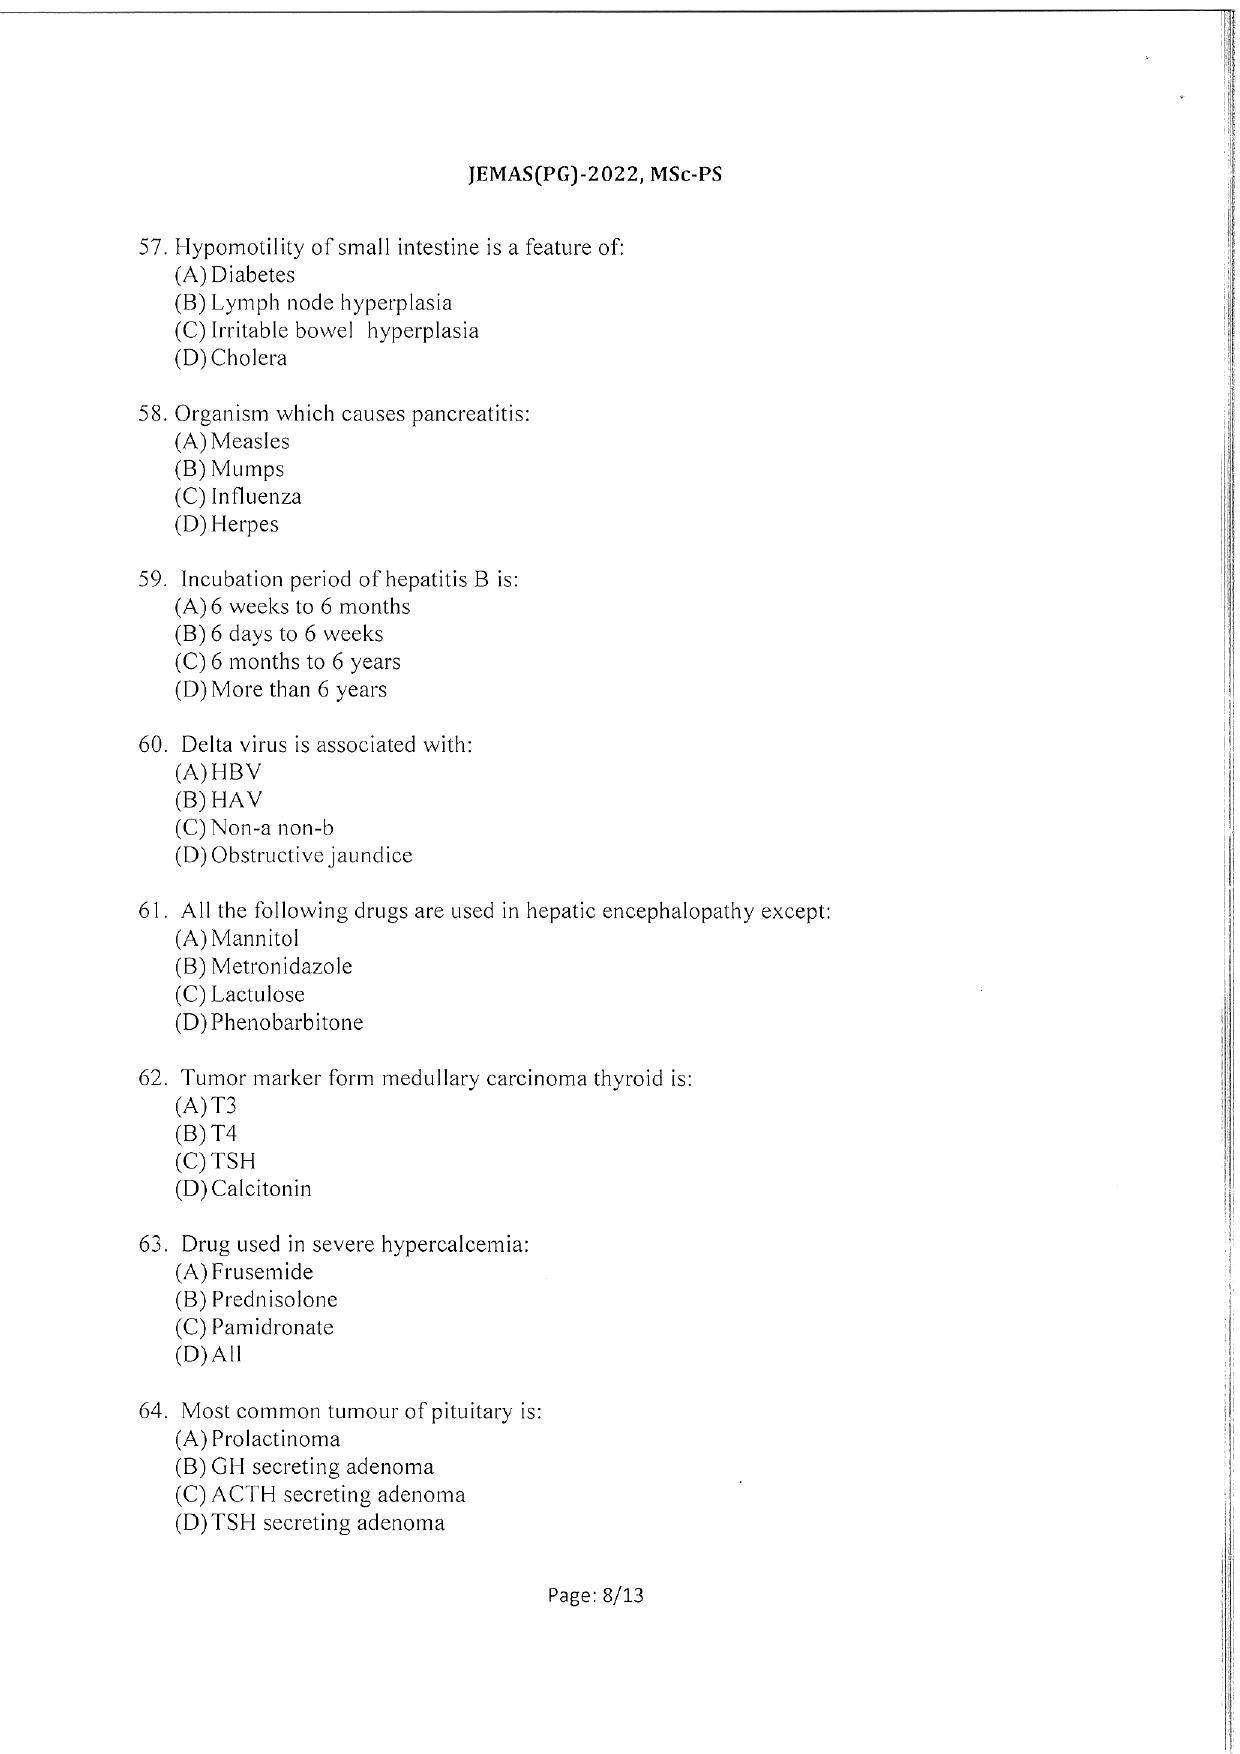 WBJEEB JEMAS (PG) 2022 MSc PS Question Paper - Page 10